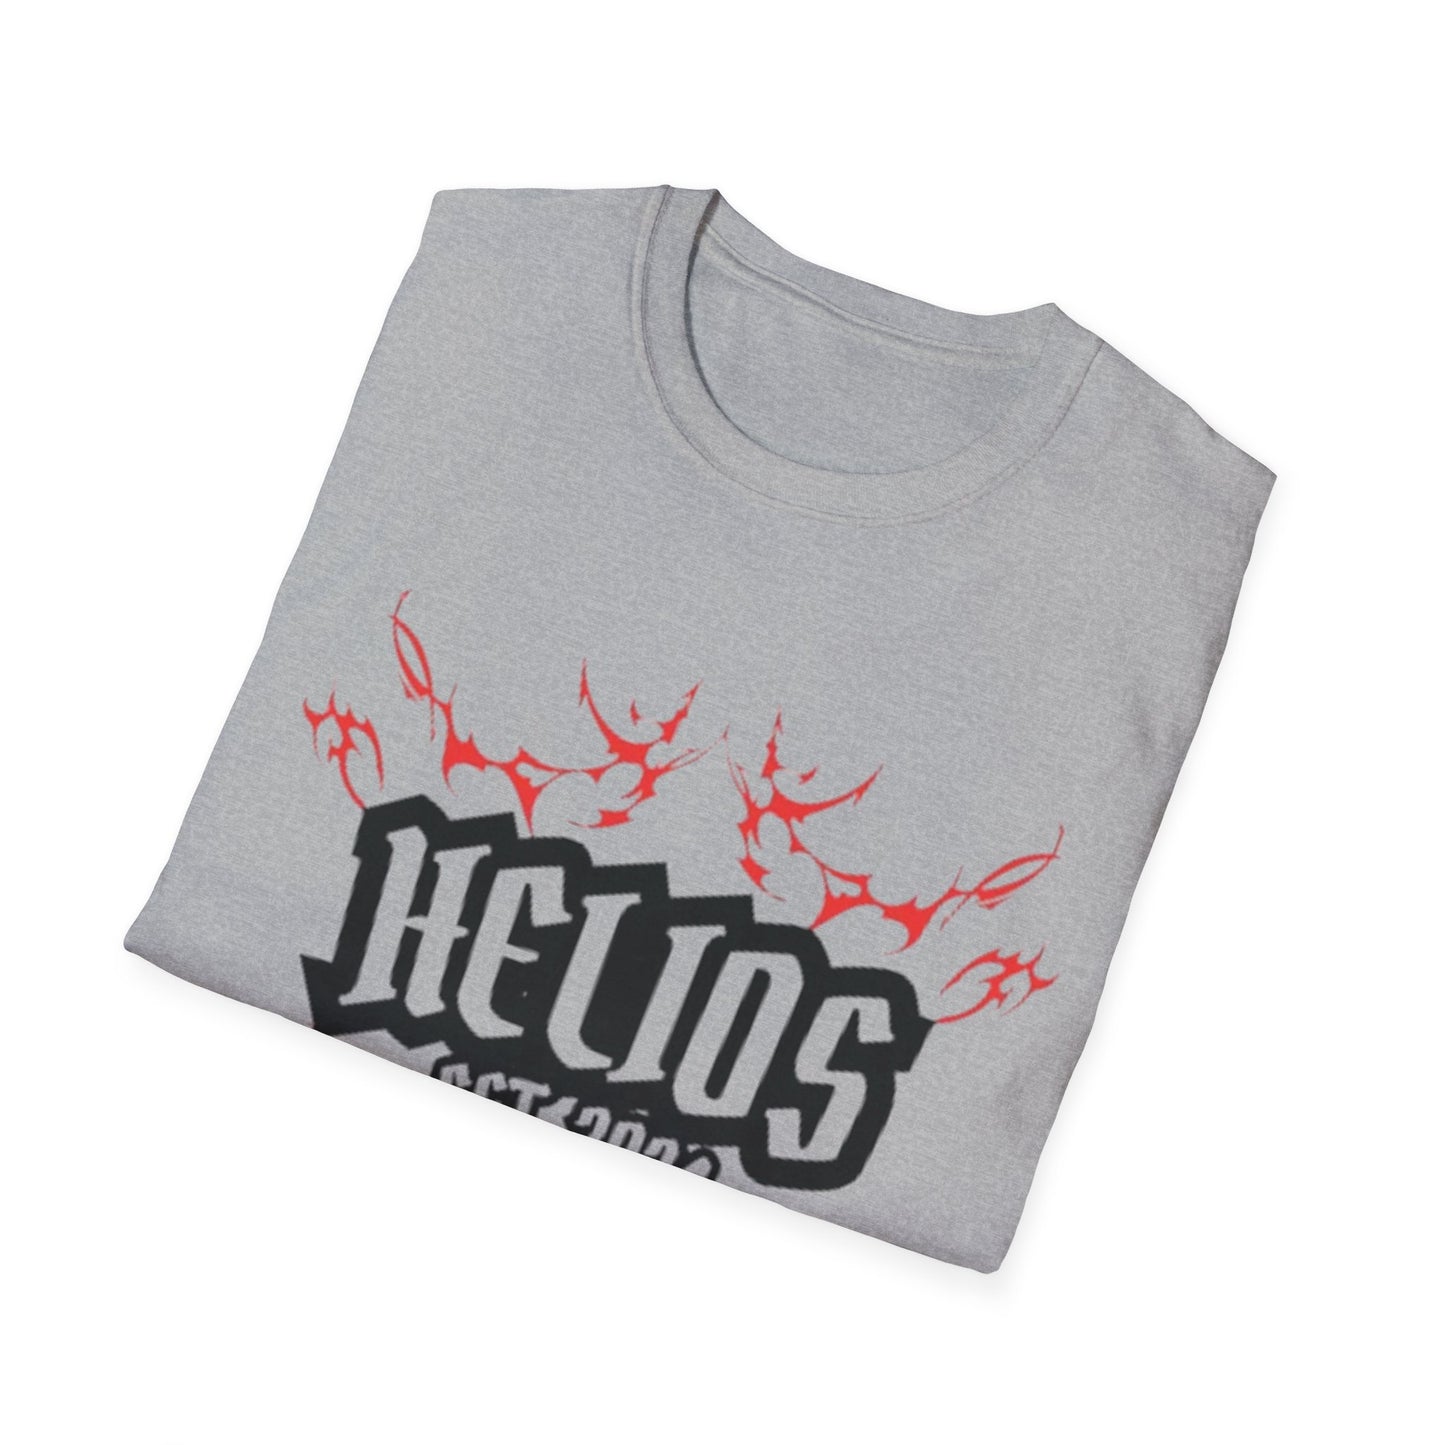 Helios T-shirt (#2)